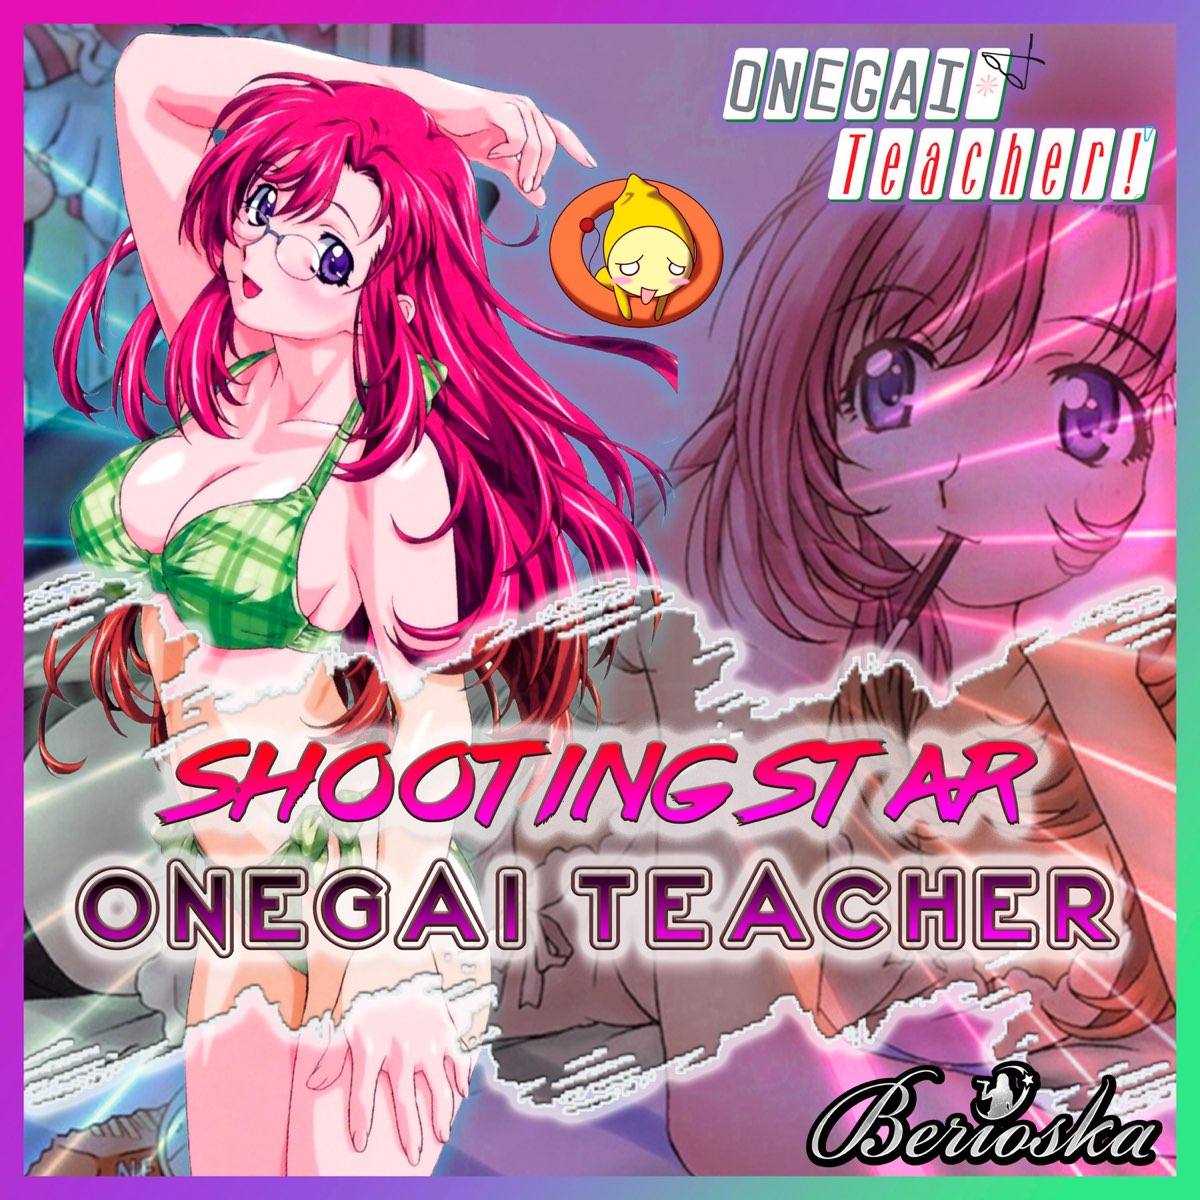 Onegai teacher shooting star